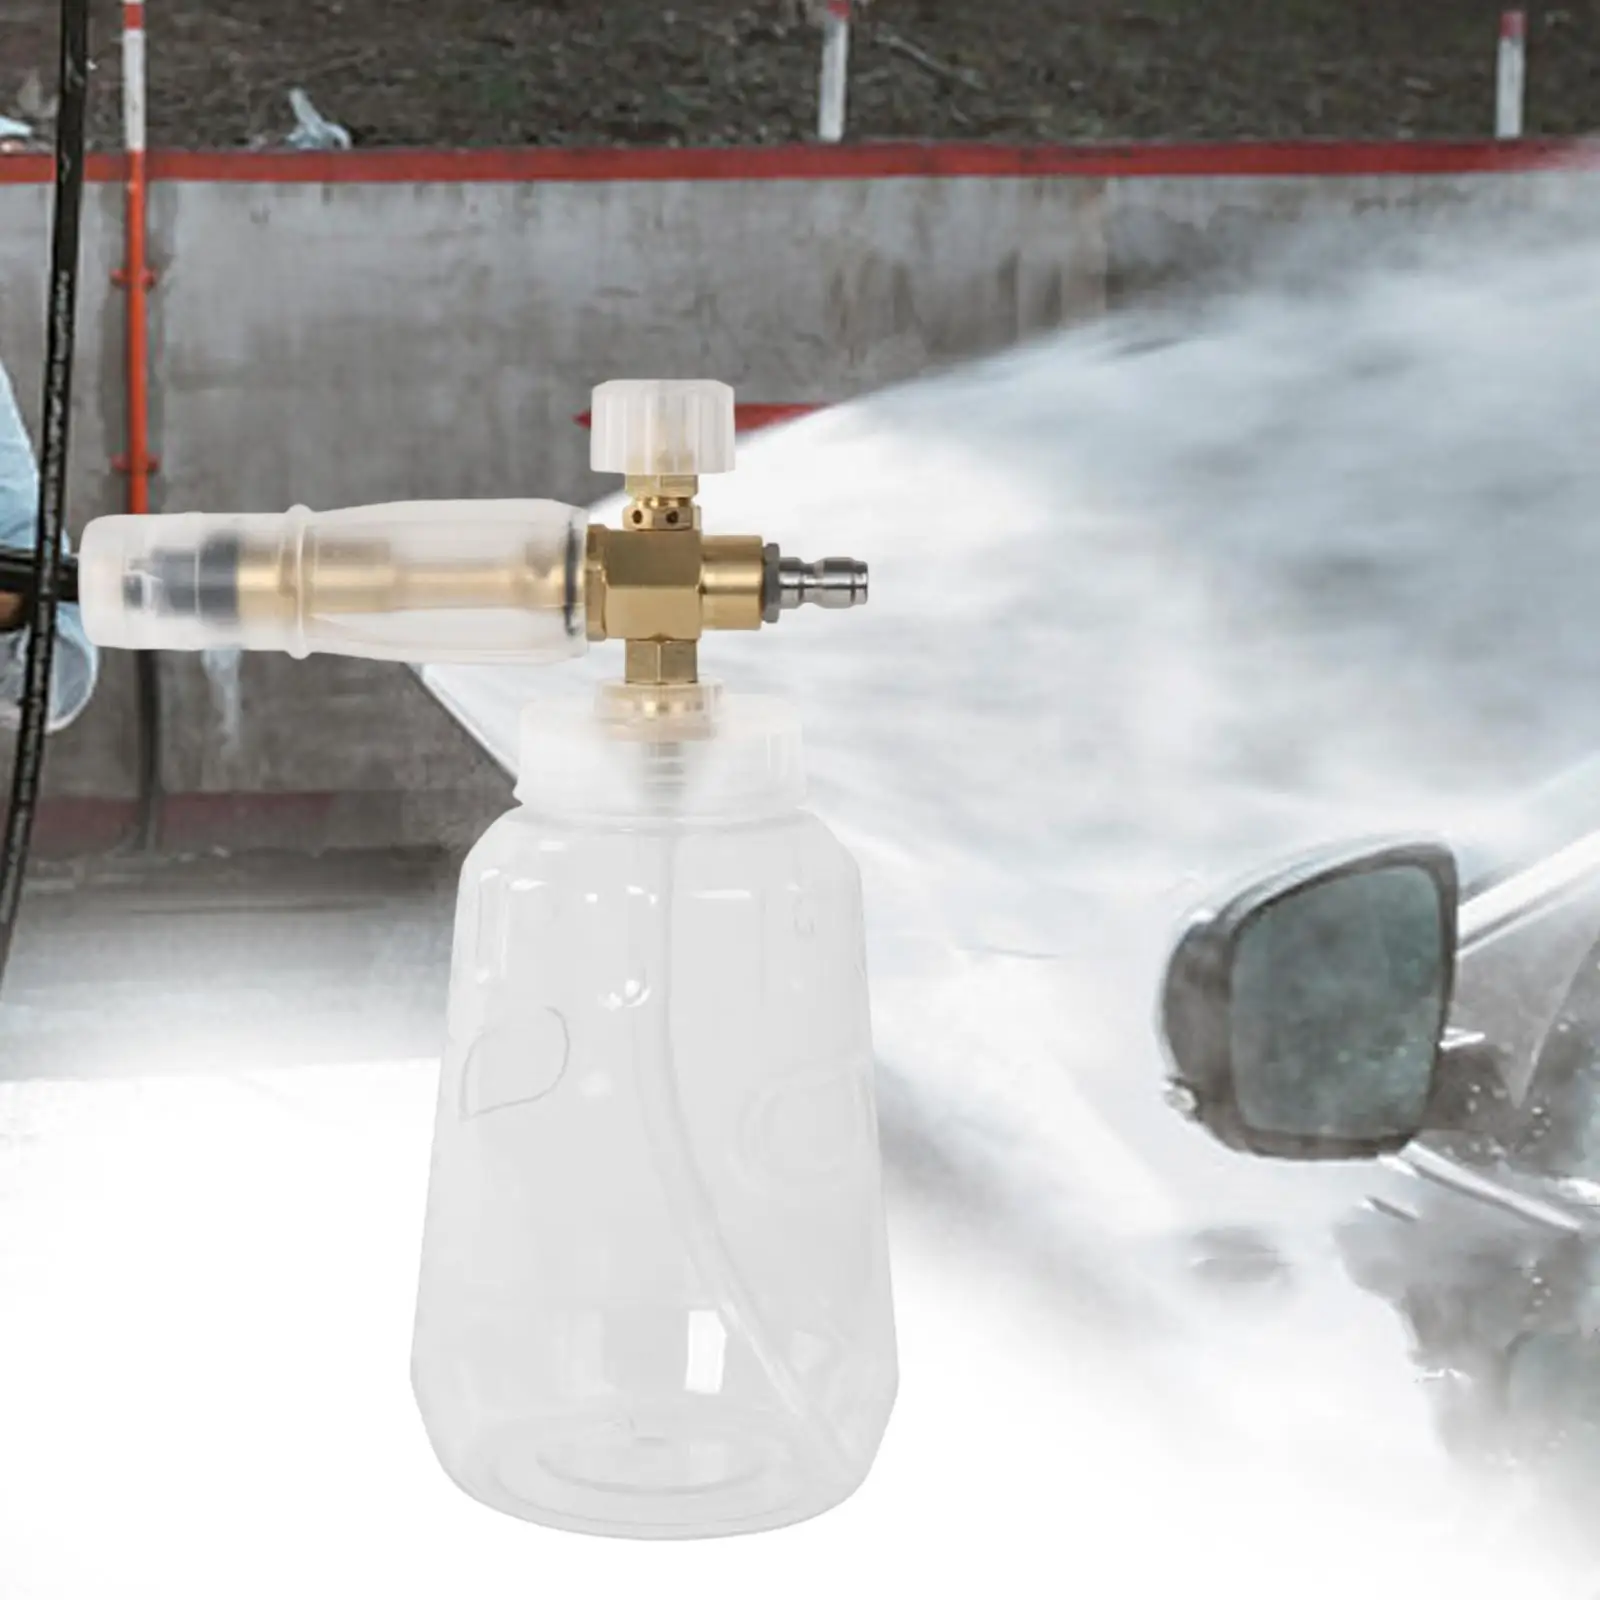 Snow Foam Lance Washer Bottle Adjustable Nozzle Handheld 1L Pressure Washer Parts for Automotive Detailing Car Window Washing